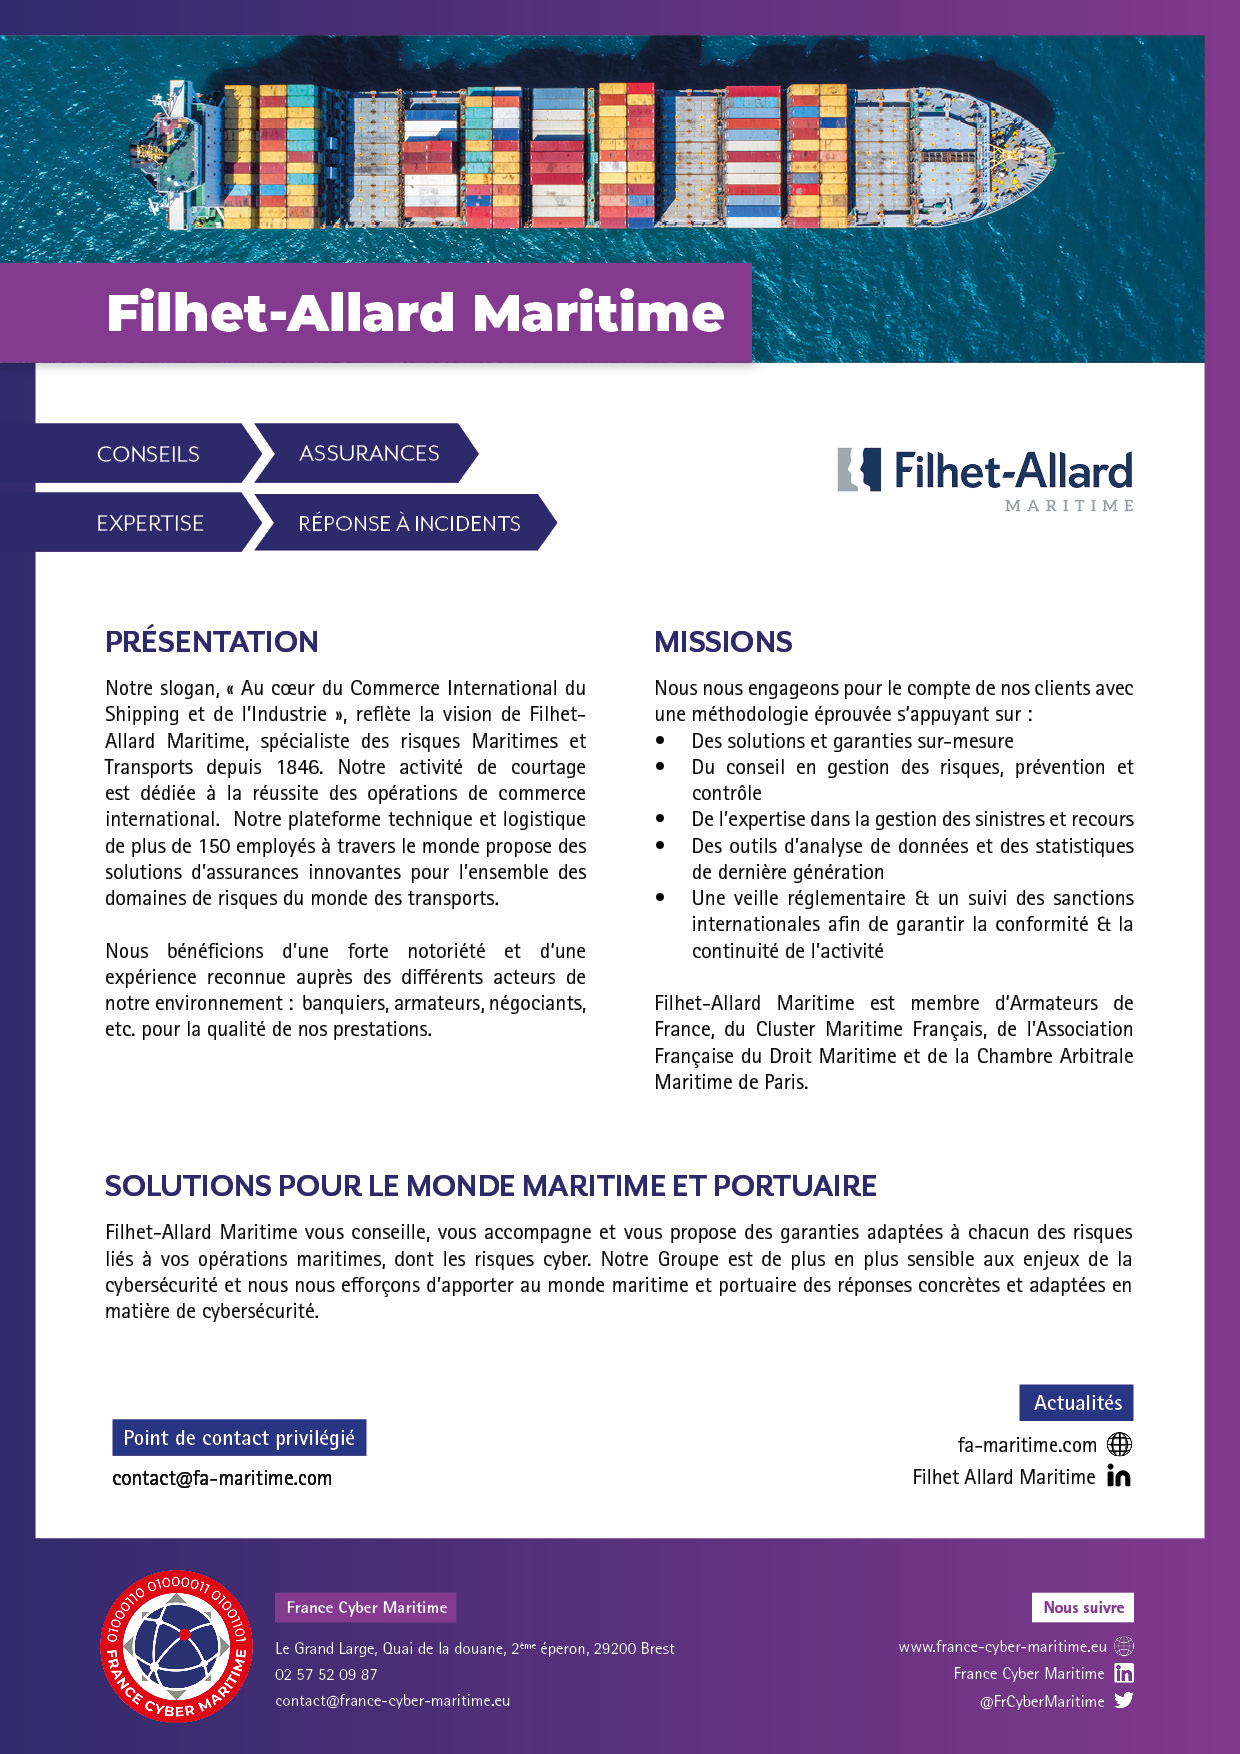 Filhet-Allard Maritime